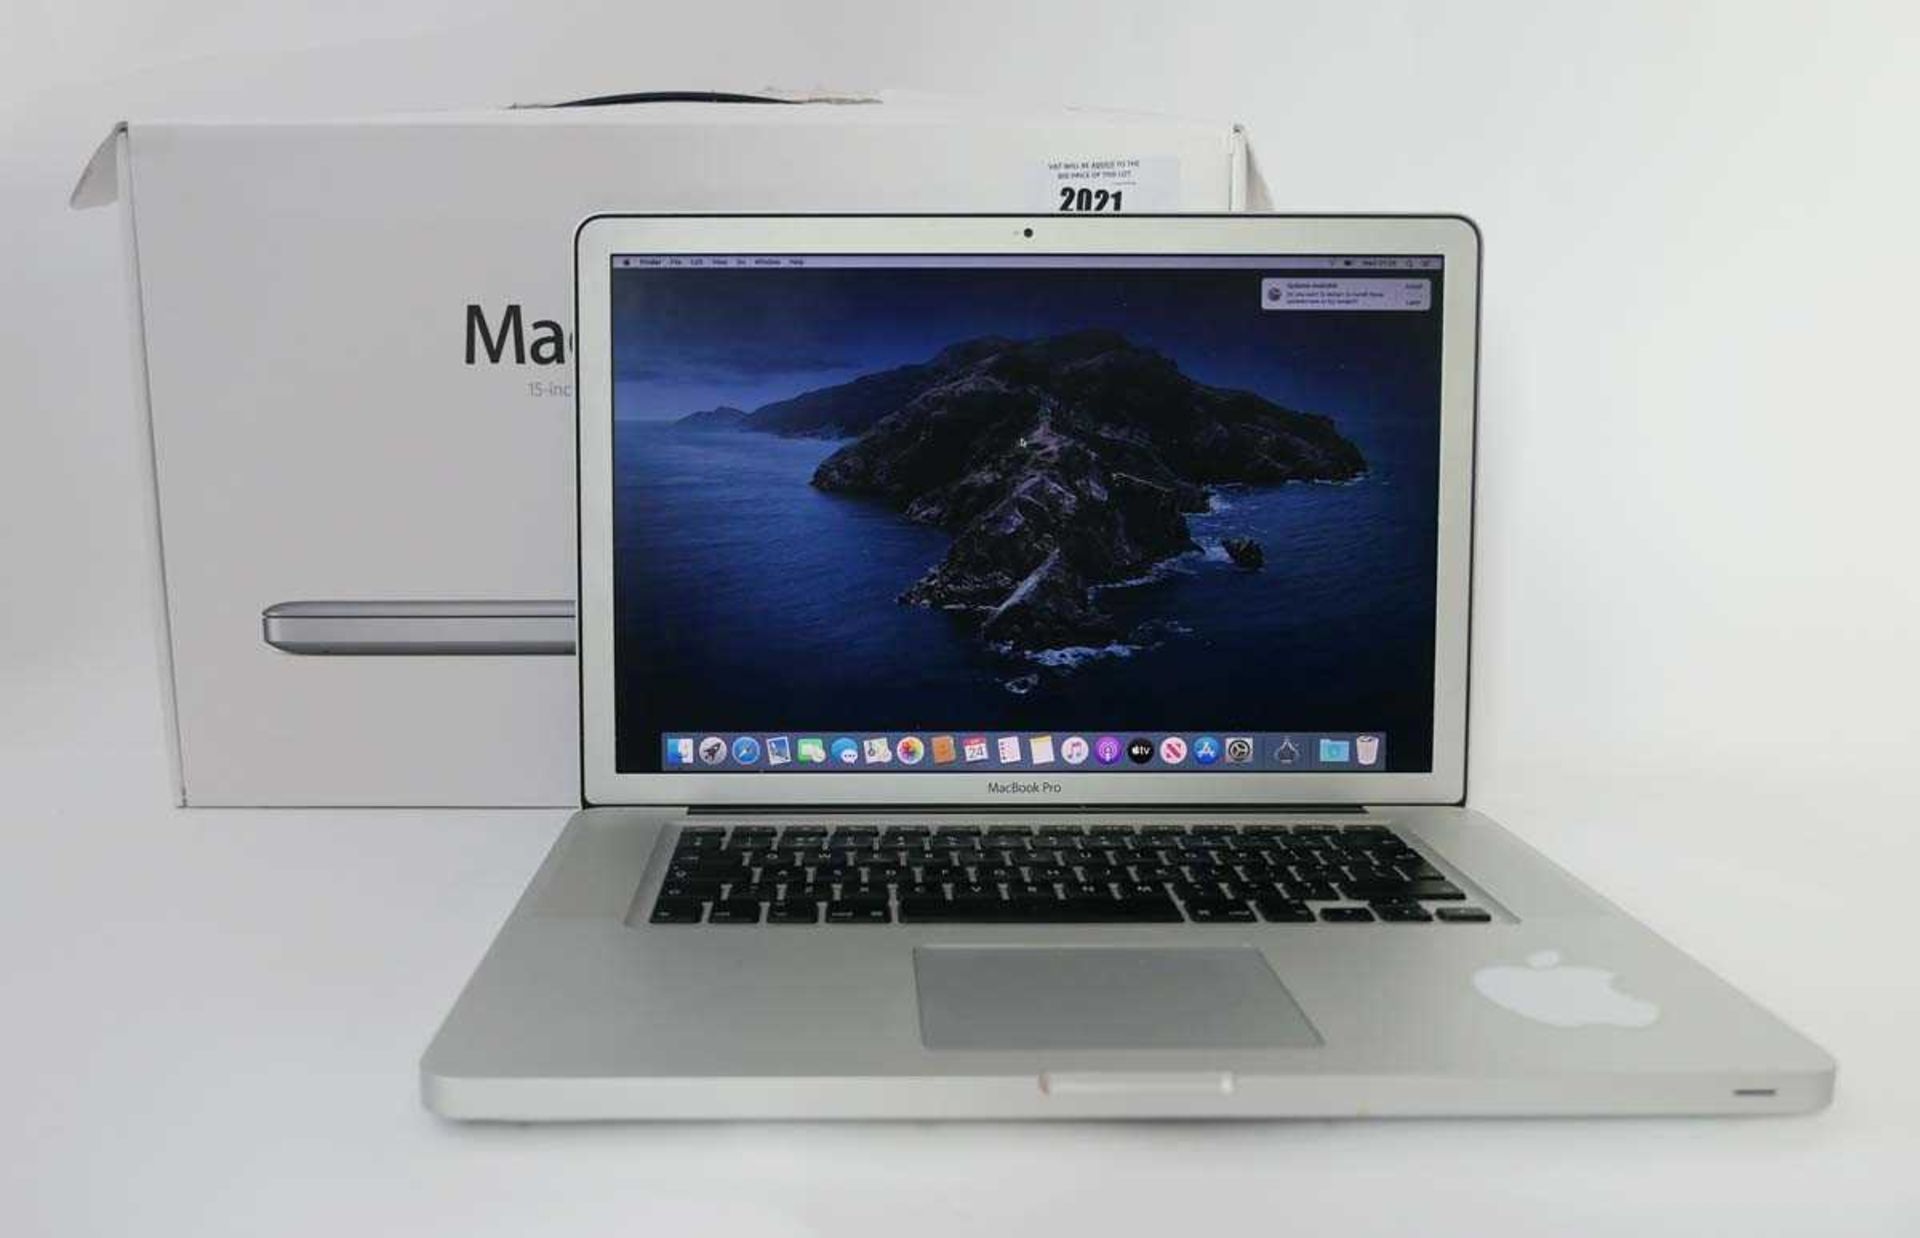 +VAT MacBook Pro 15.4" 2012 A1286 Silver laptop with Intel i7, 8GB RAM, 256GB SSD, box and PSU